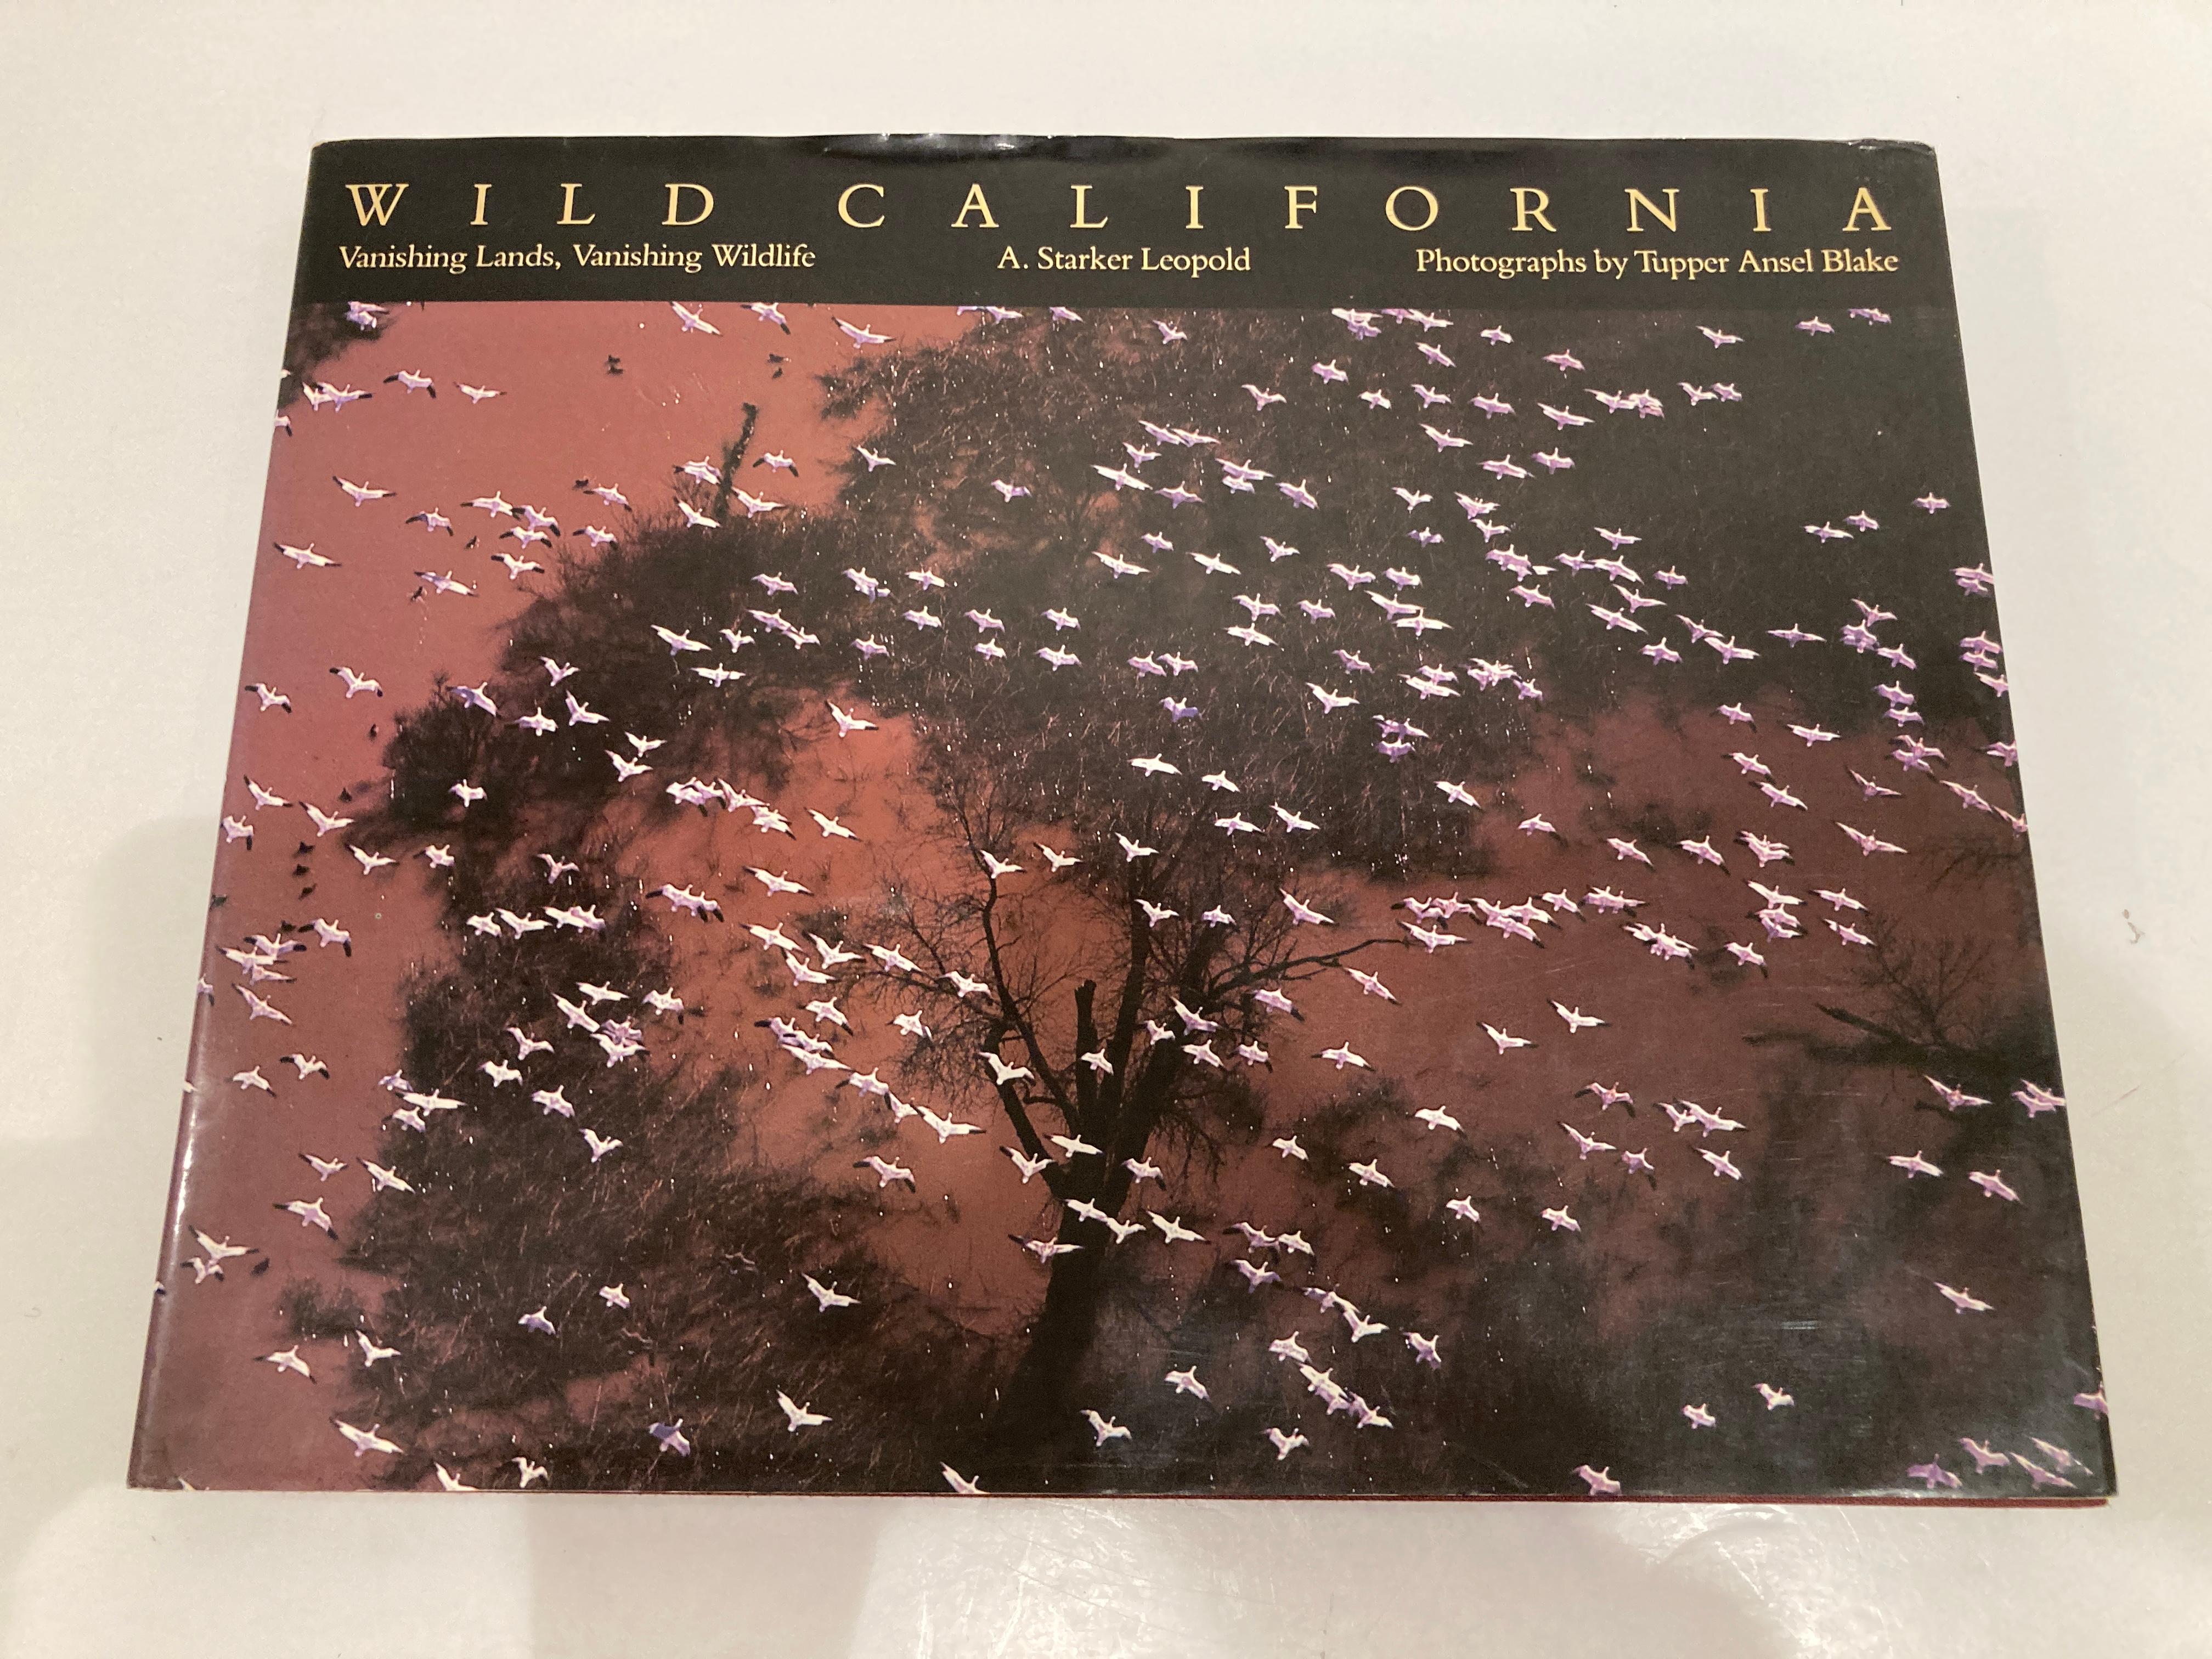 Livre de collection « Wild California: Vanishing Lands, Vanishing Wildlife » signé Bon état - En vente à North Hollywood, CA